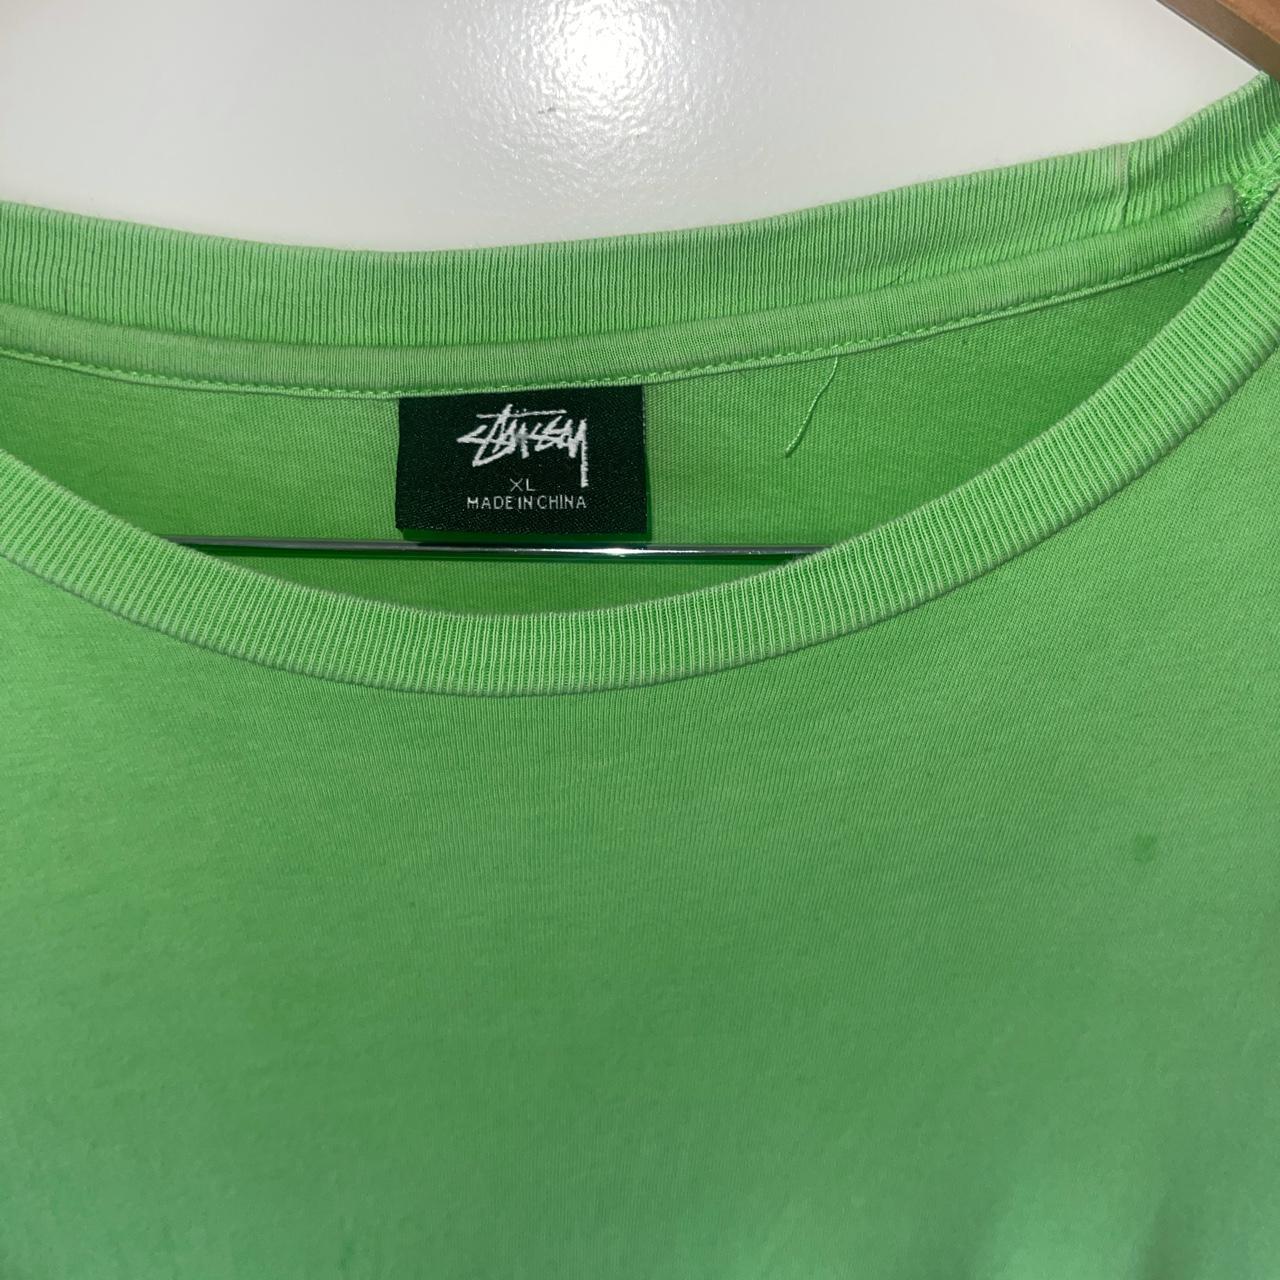 Stussy international soft tshirt - universal store,... - Depop